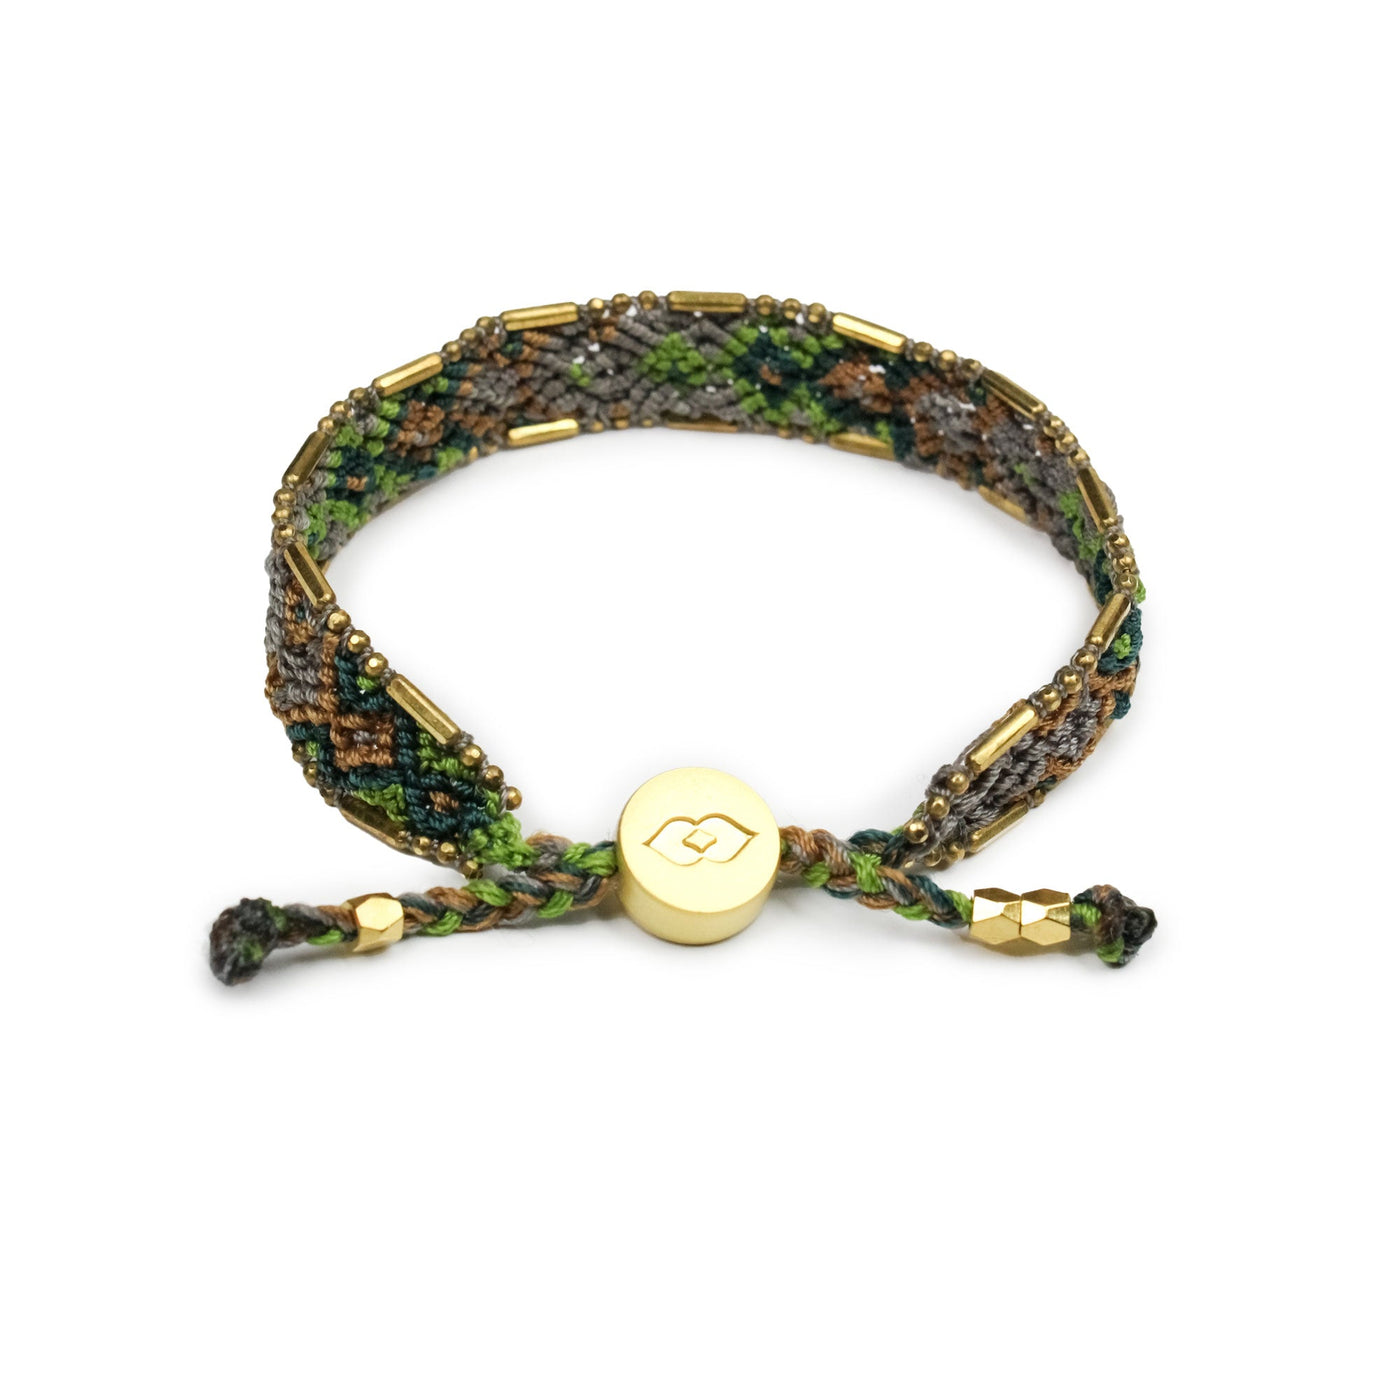 Bali Friendship Bracelet - Olive Camo